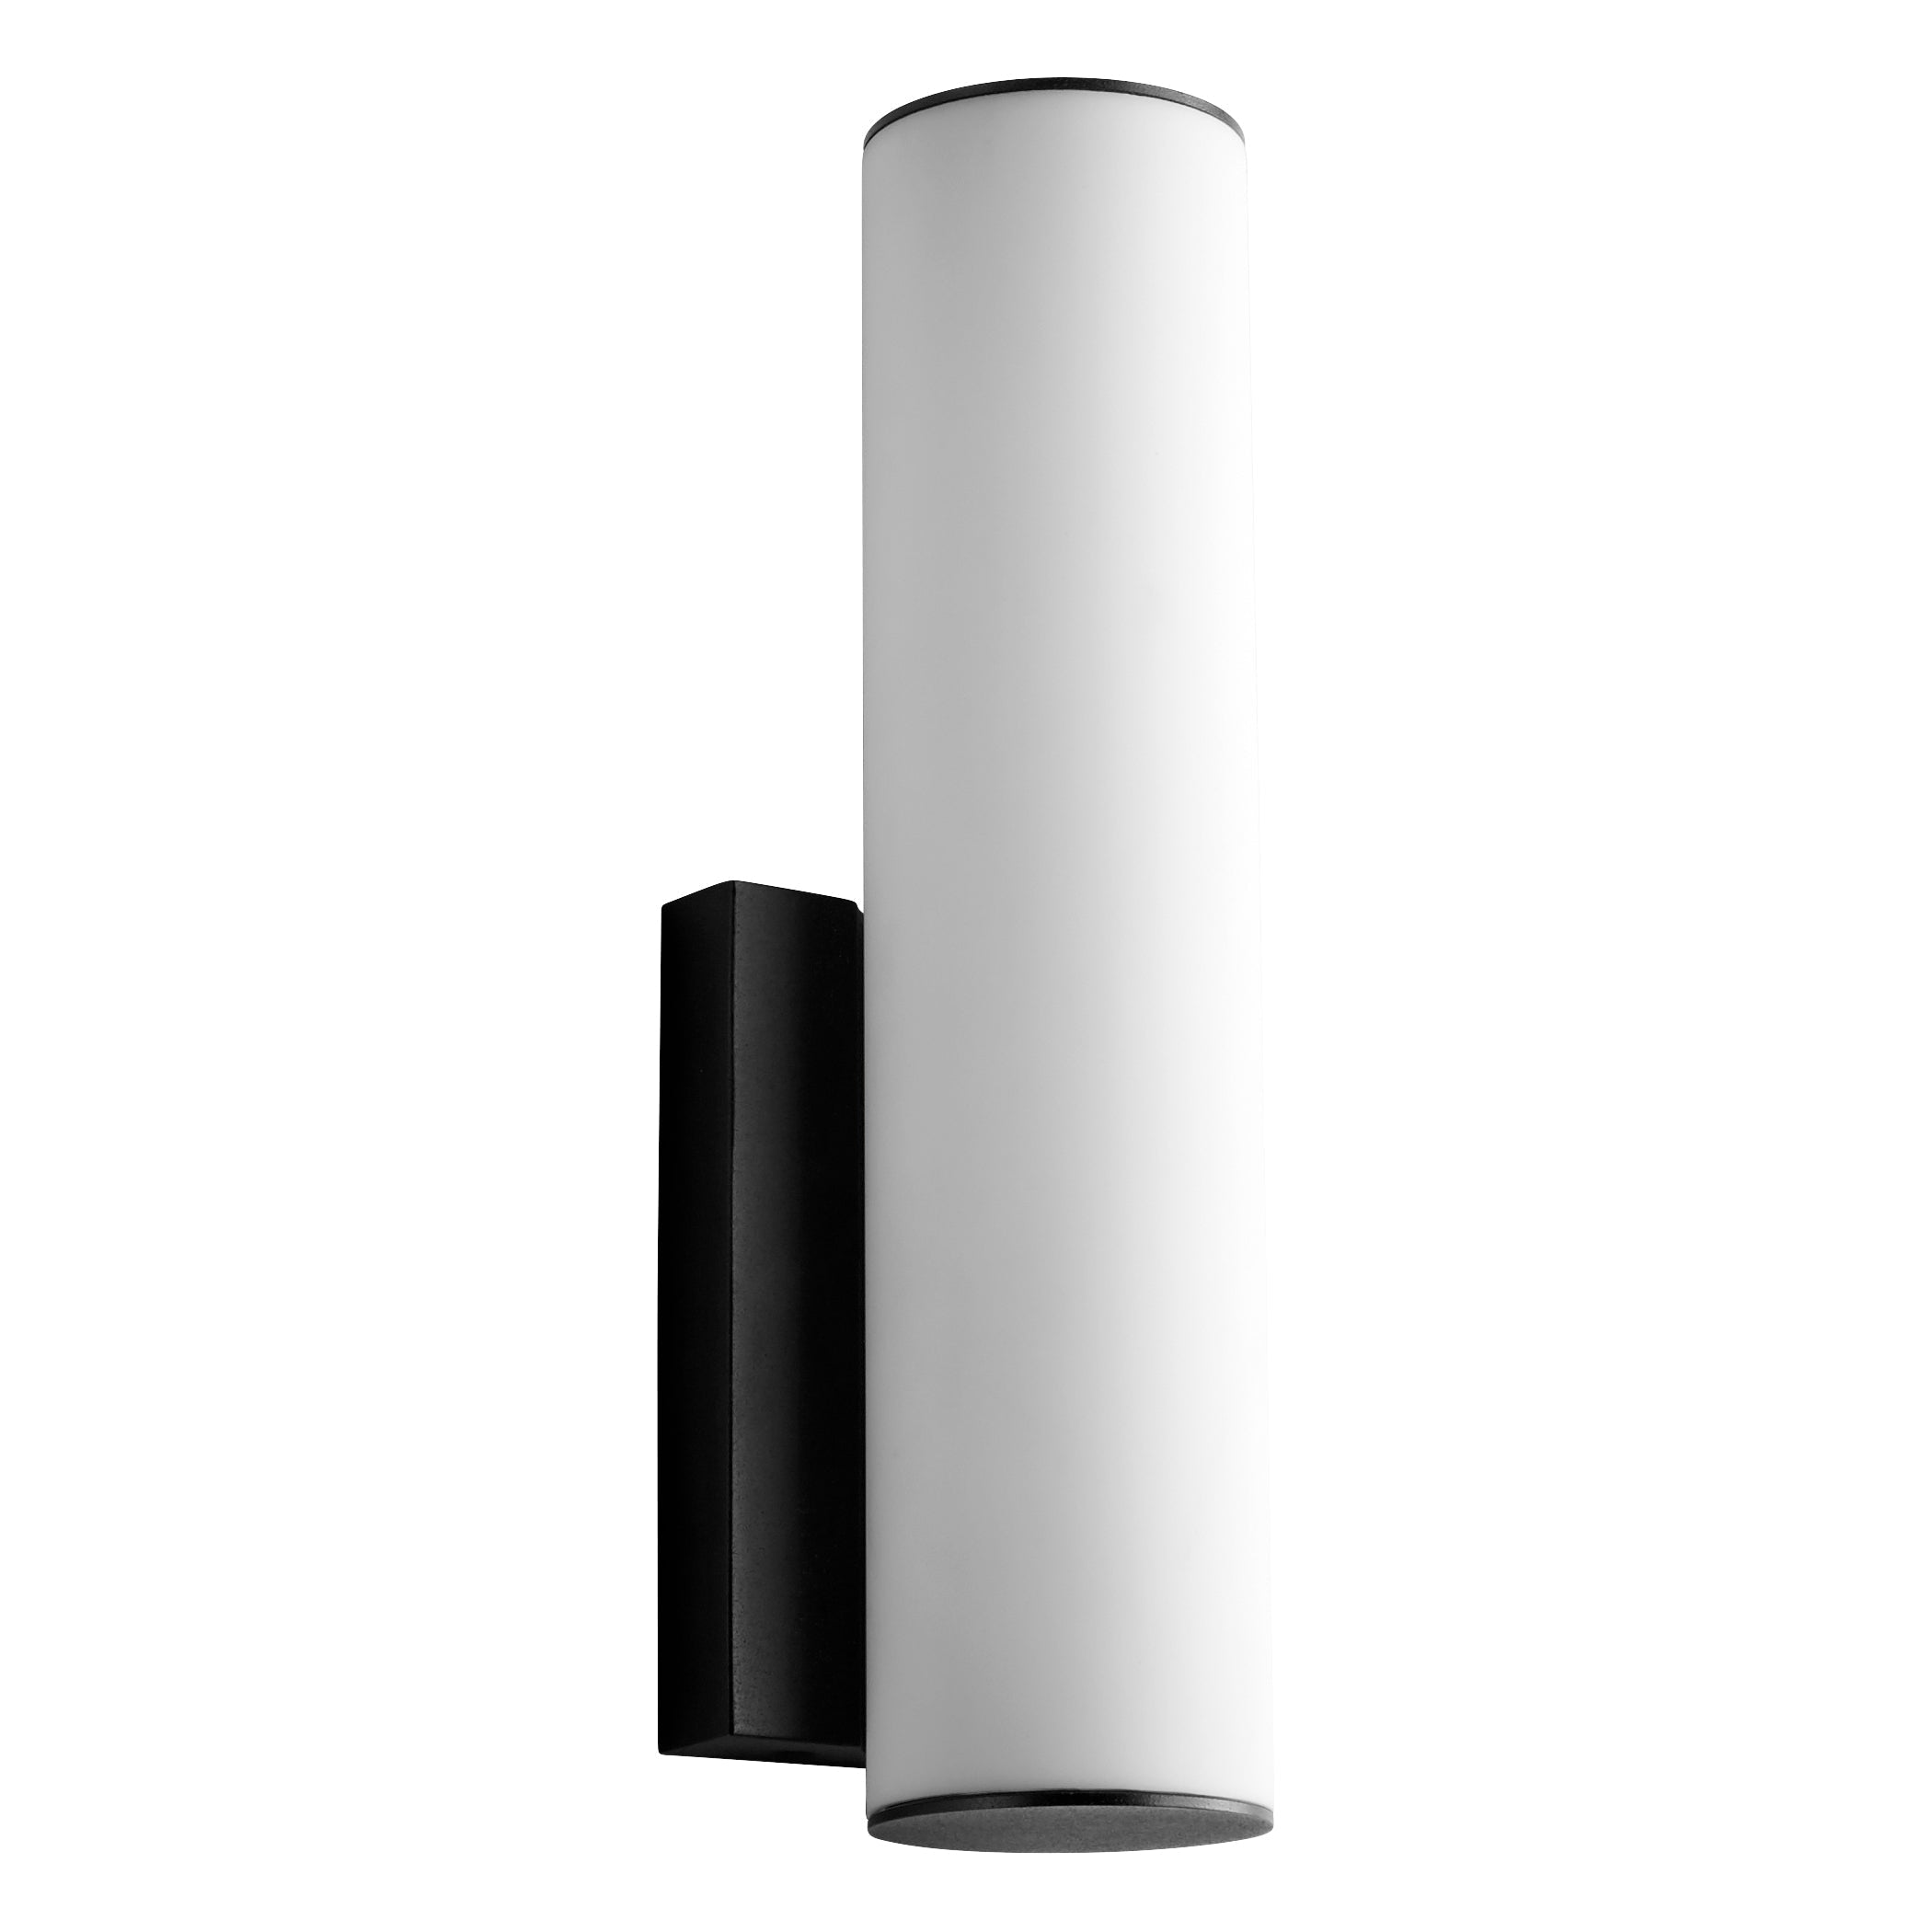 Oxygen FUGIT 3-5010-15 Cylinder Wall Sconce Light Fixture, 12 Inch - Black